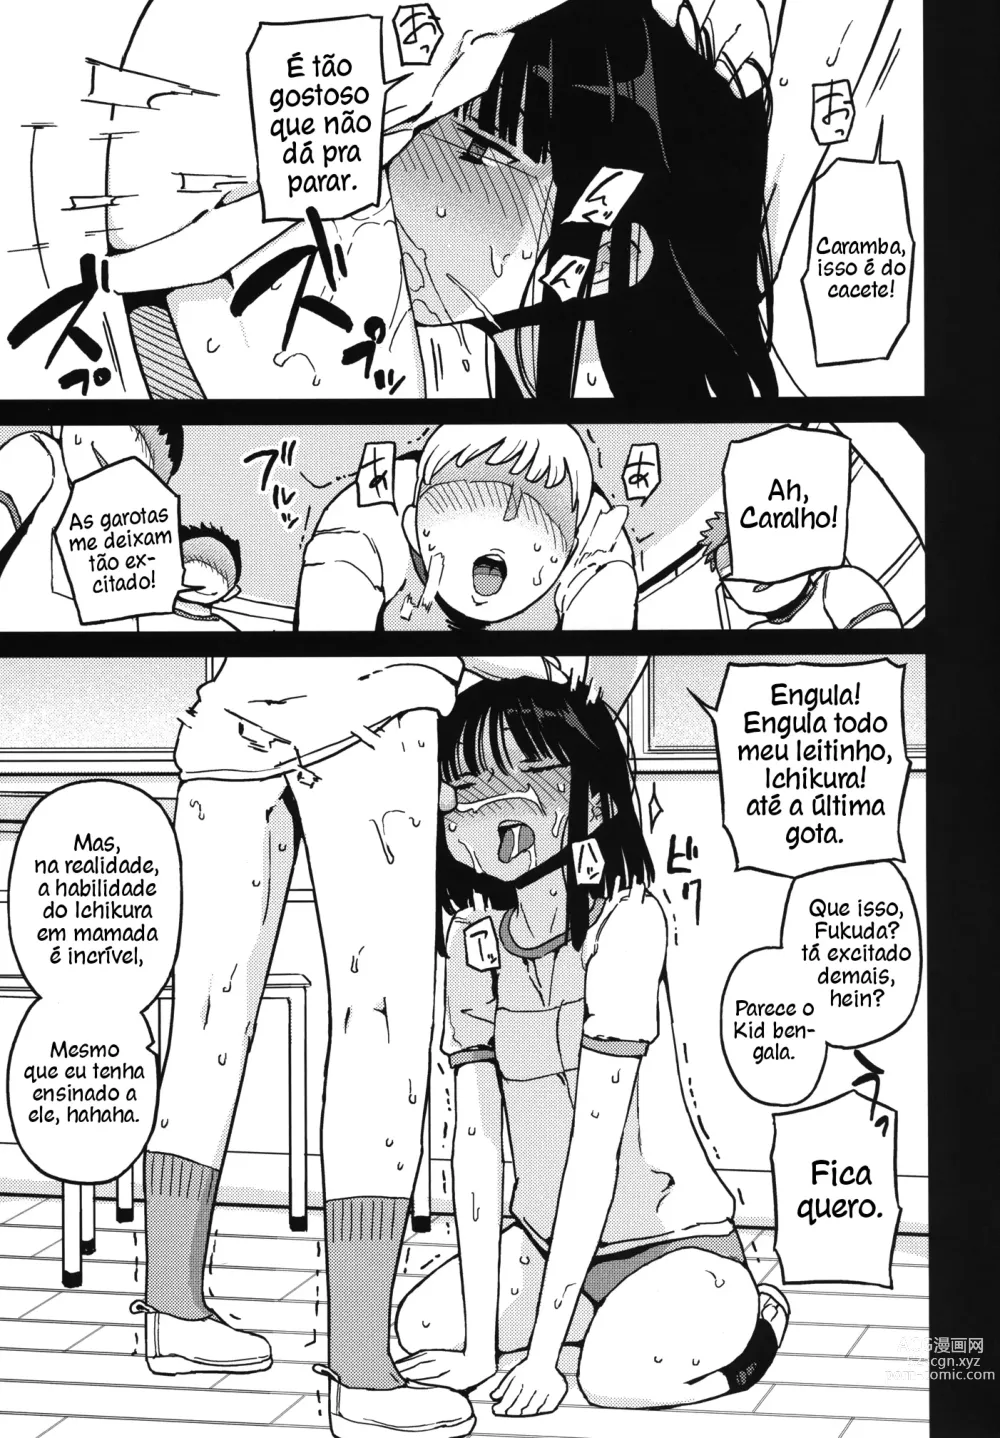 Page 5 of doujinshi TS: Quando Ele se tornou Ela